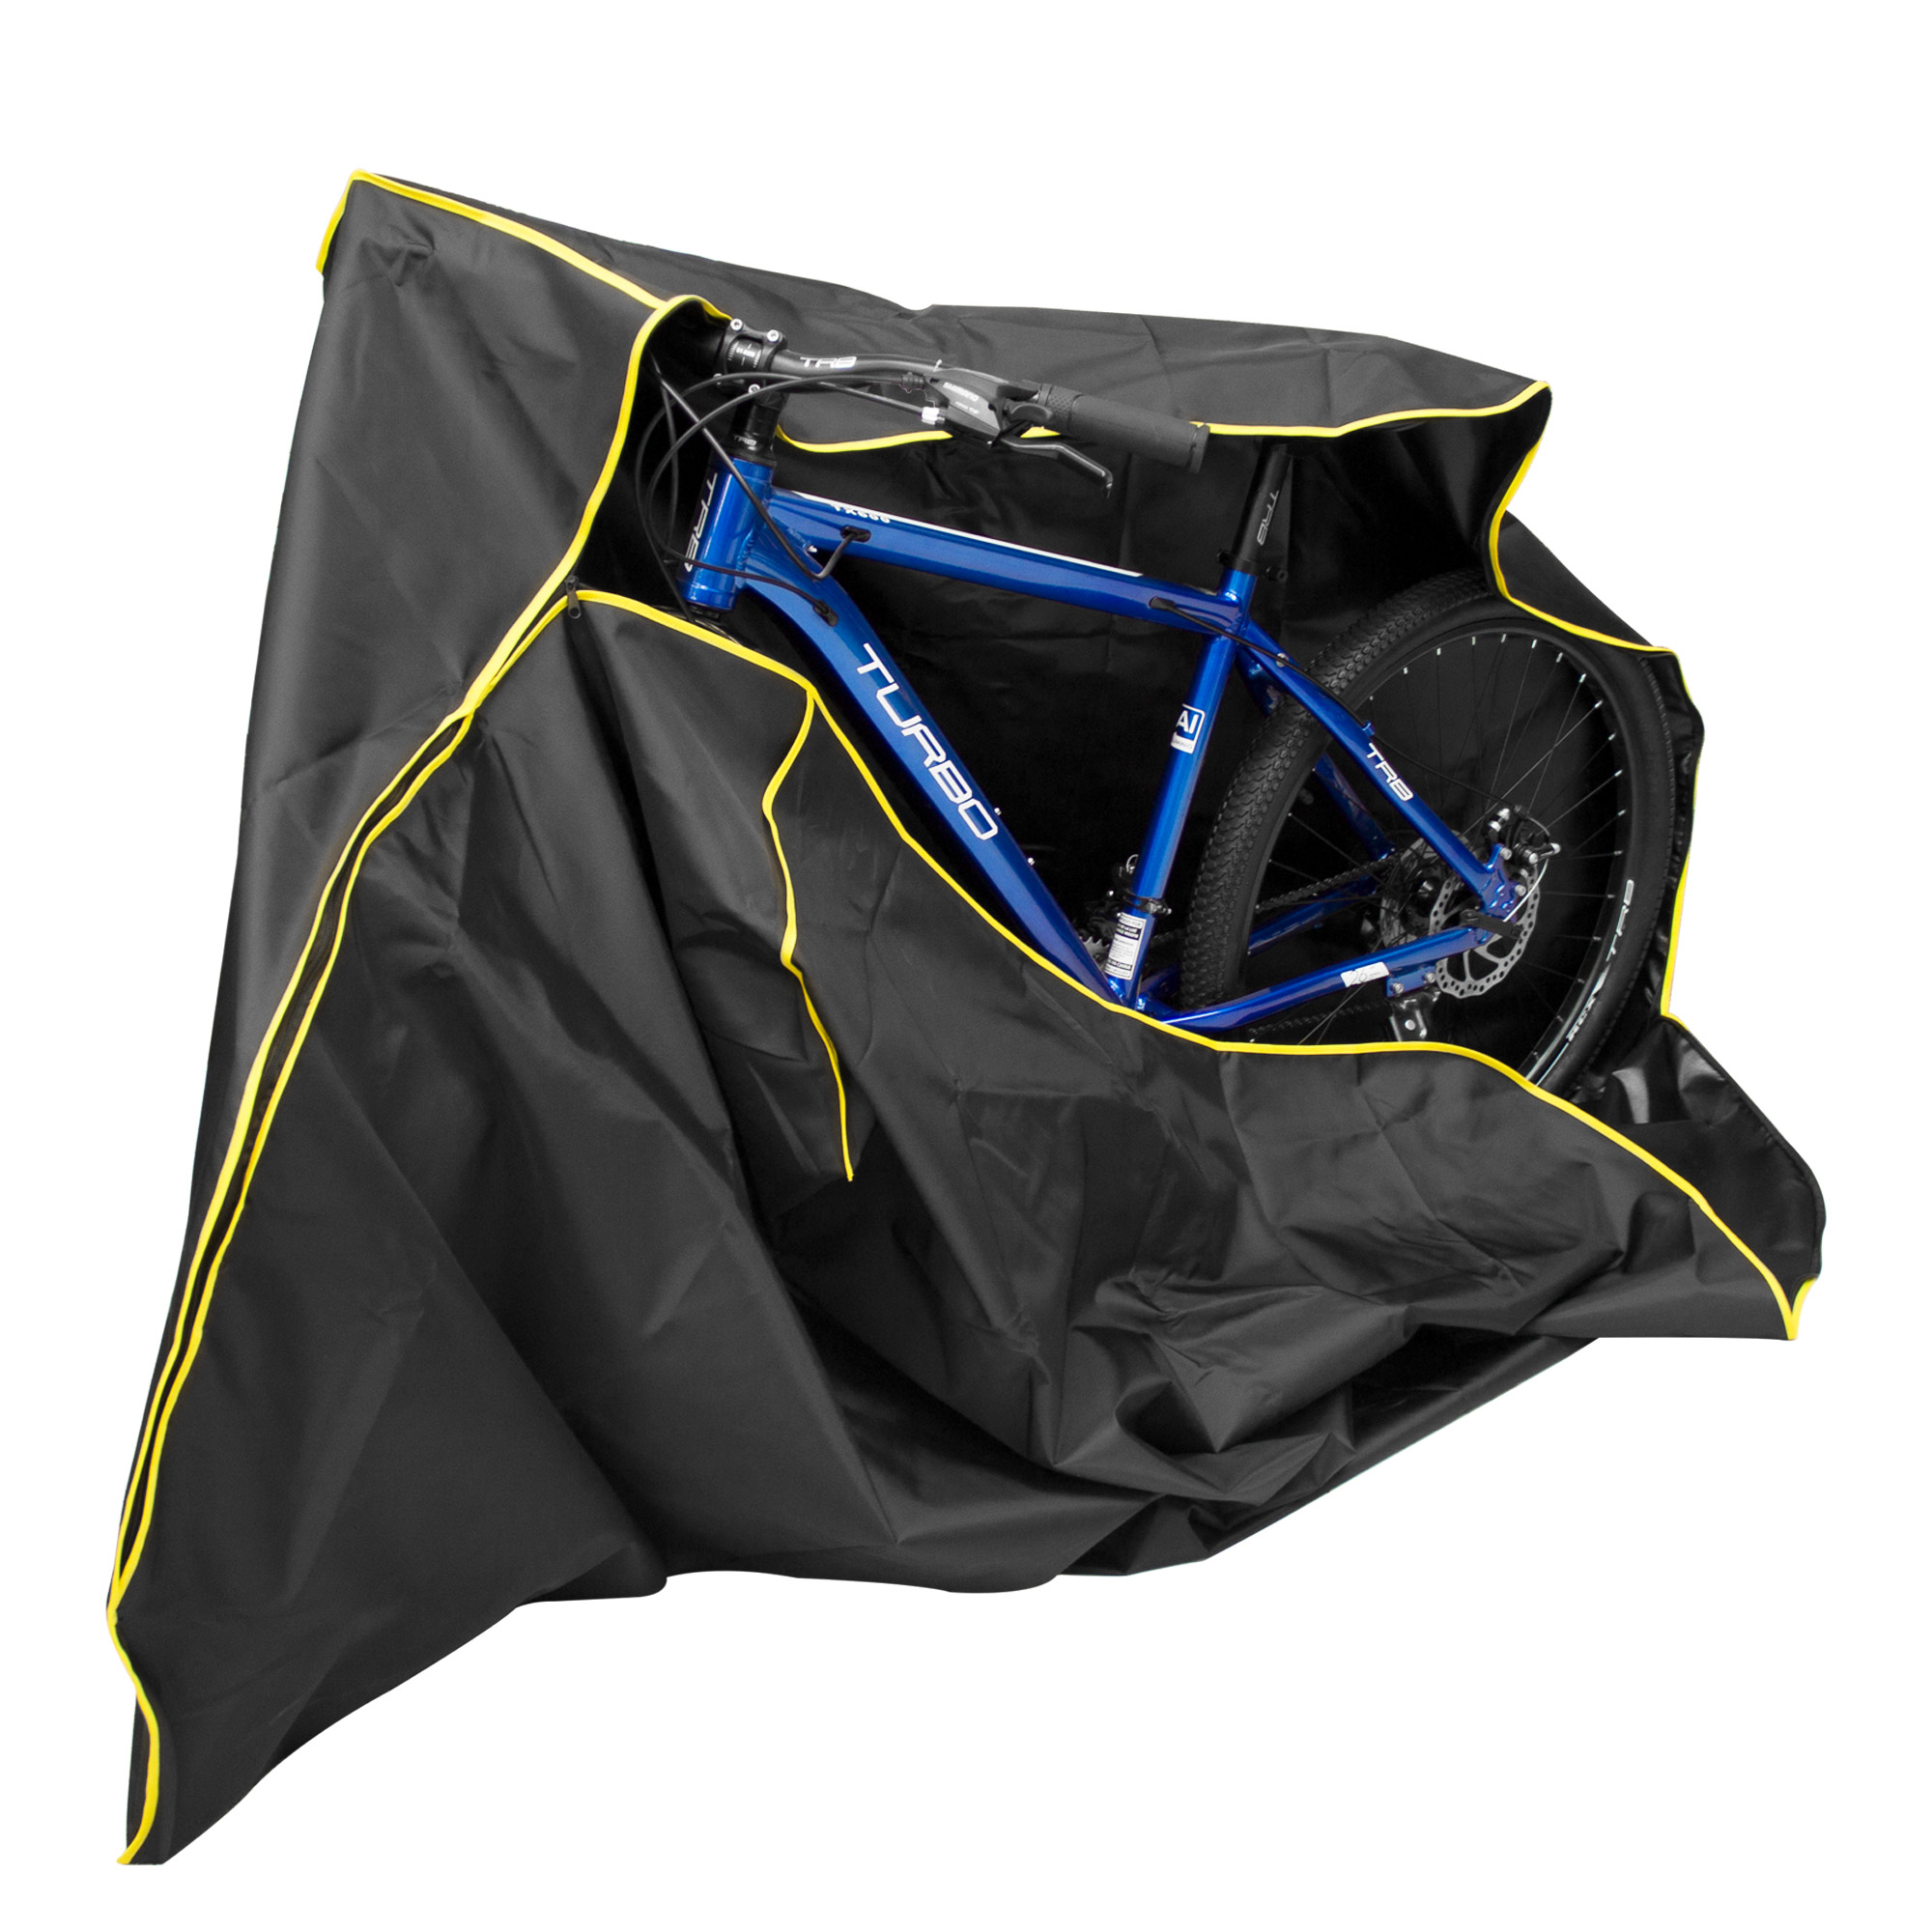 Ciclometa Detalles Funda para bicicleta grande impermeable y hermetica 8018  BikeParkingSystem